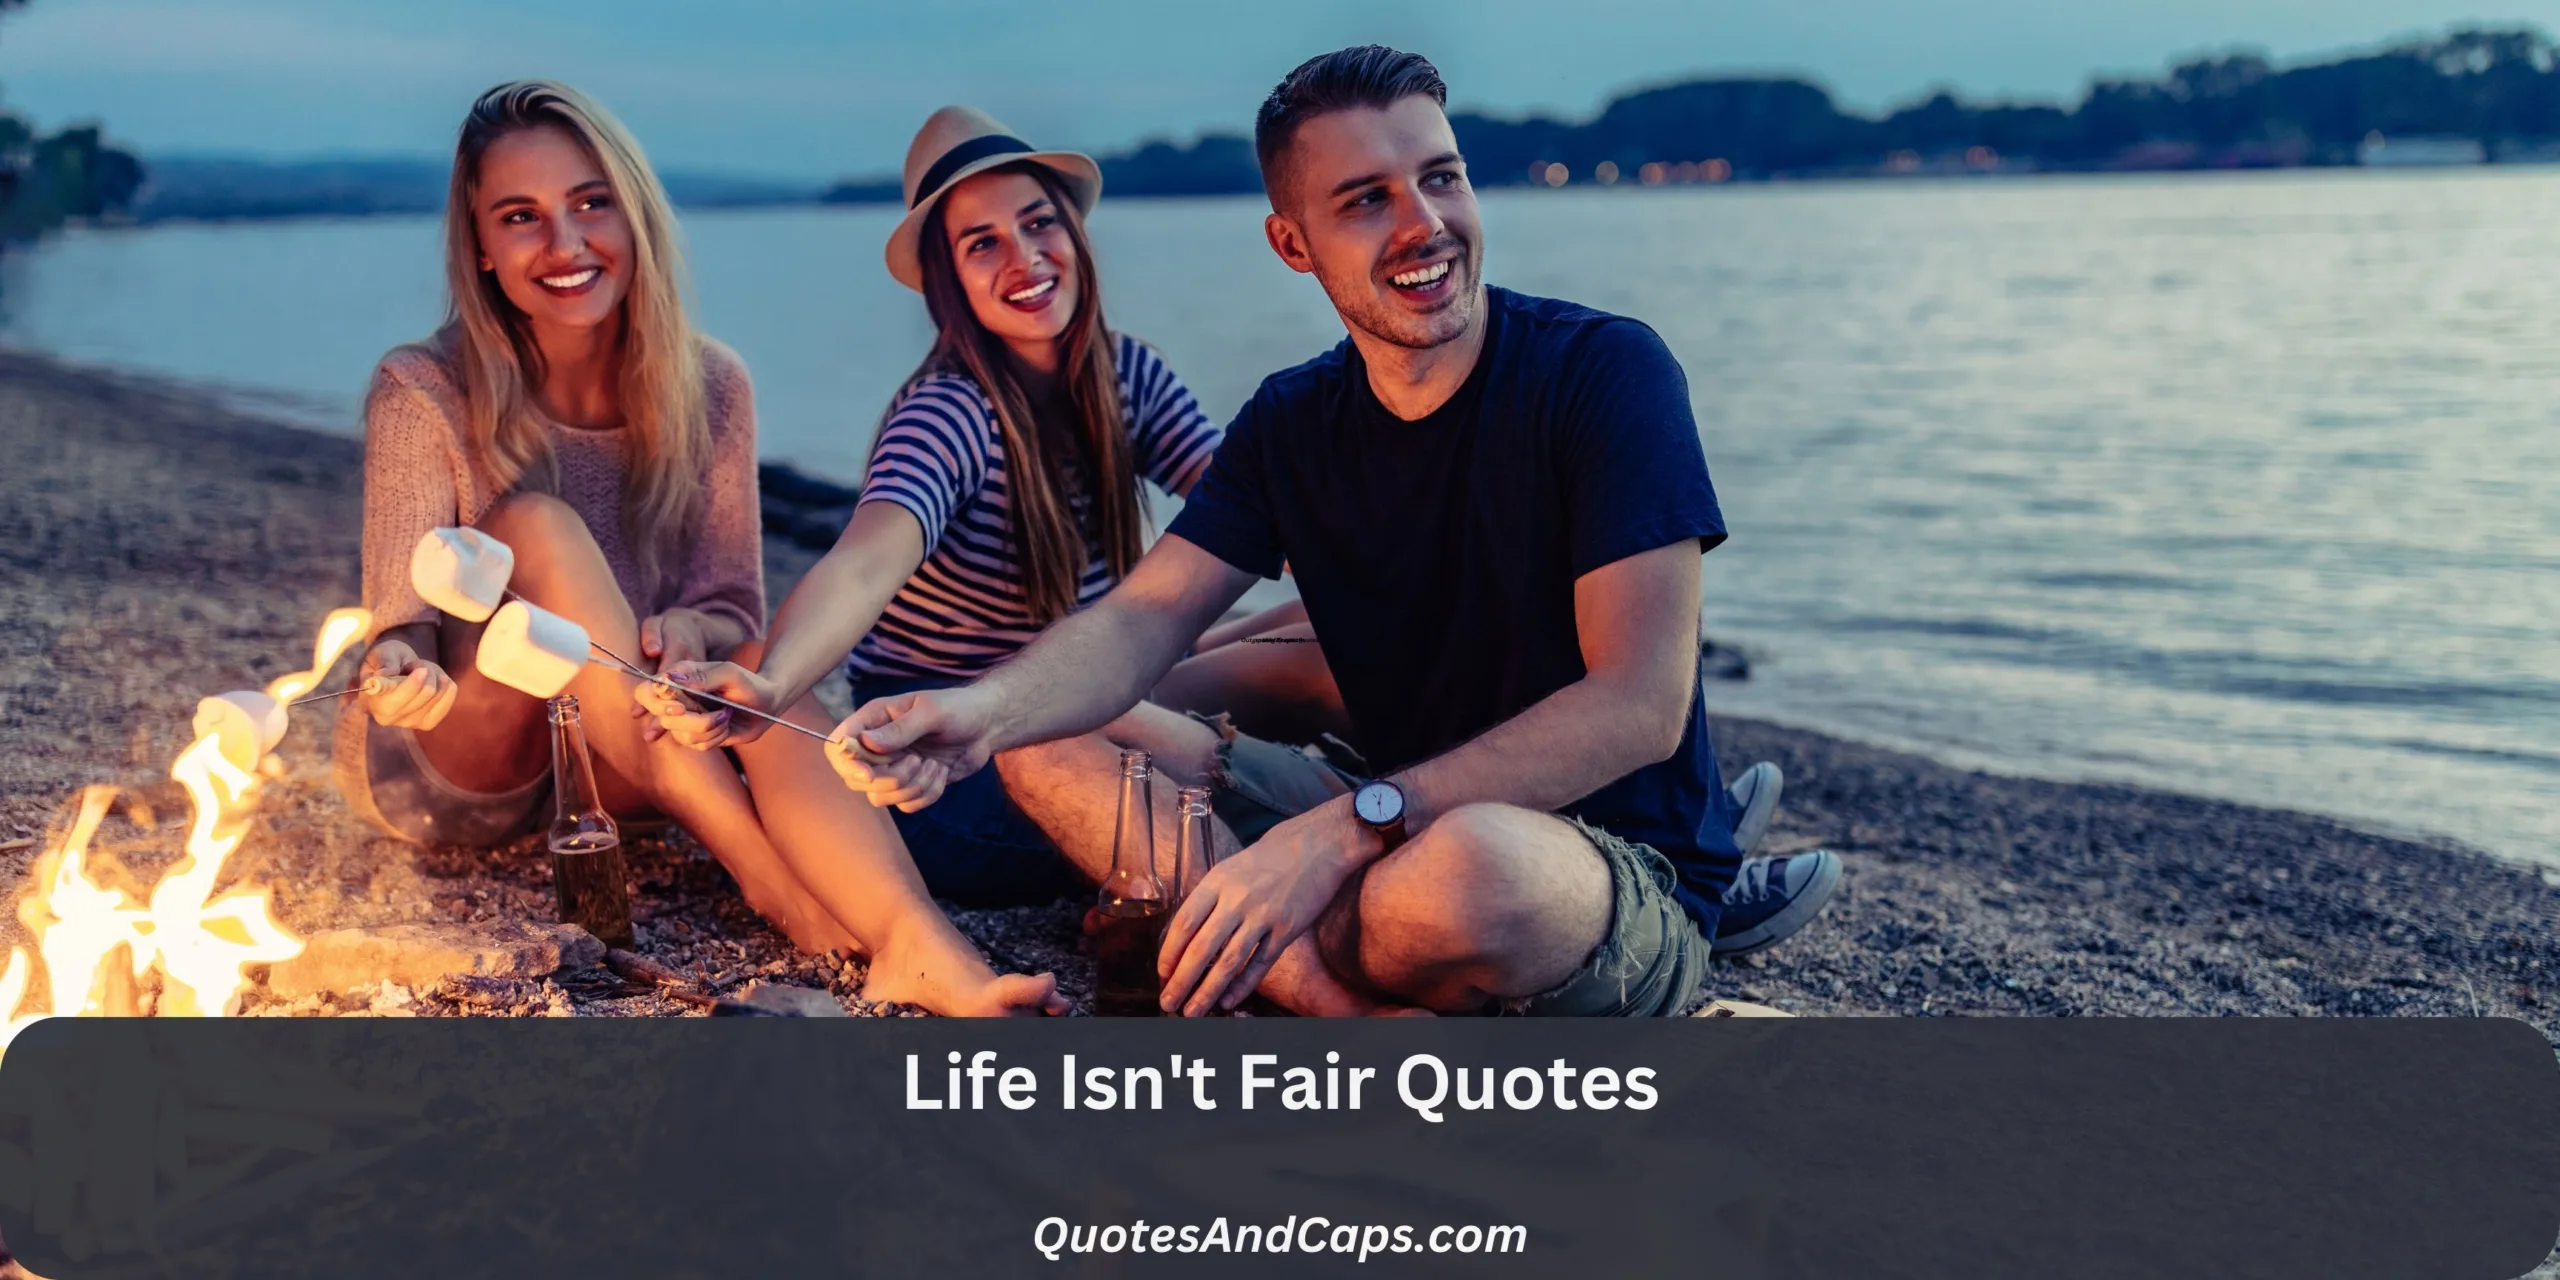 Life Isn't Fair Quotes